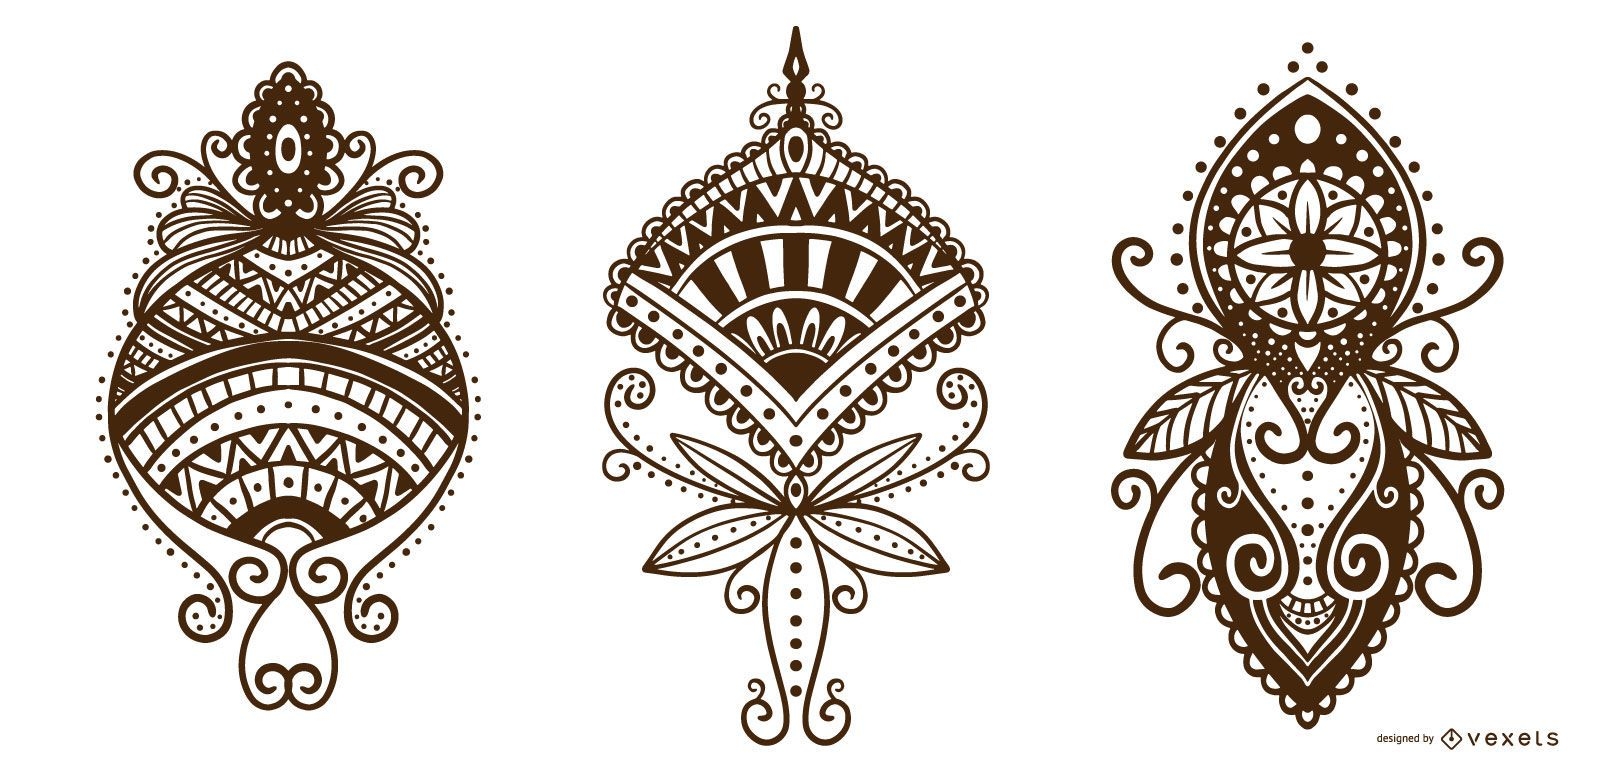 15 beautiful ornamental tattoos for men and women   Онлайн блог о тату  IdeasTattoo